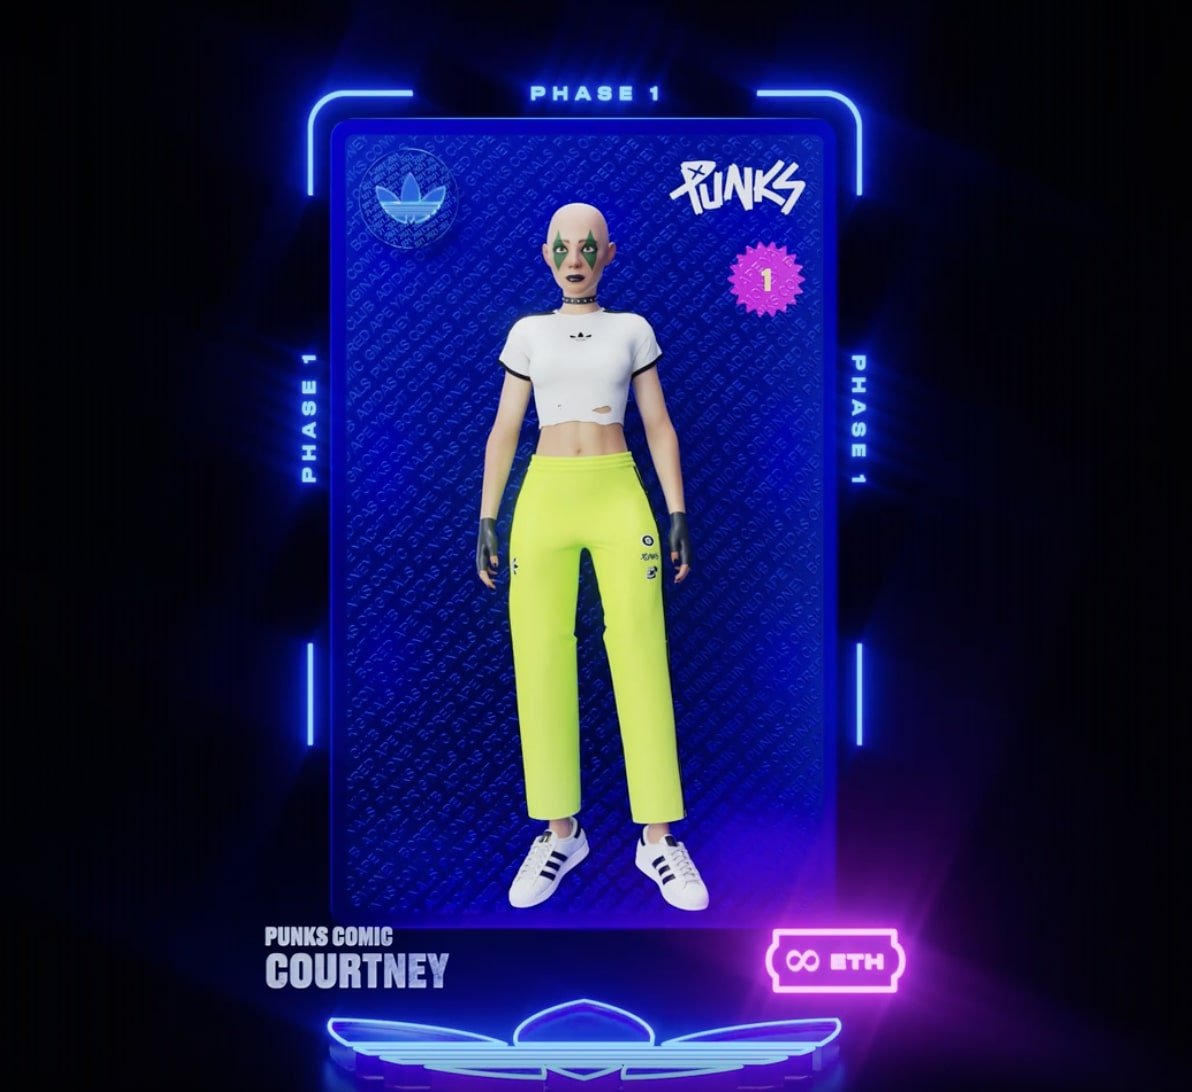 An avatar wearing Adidas tracks 